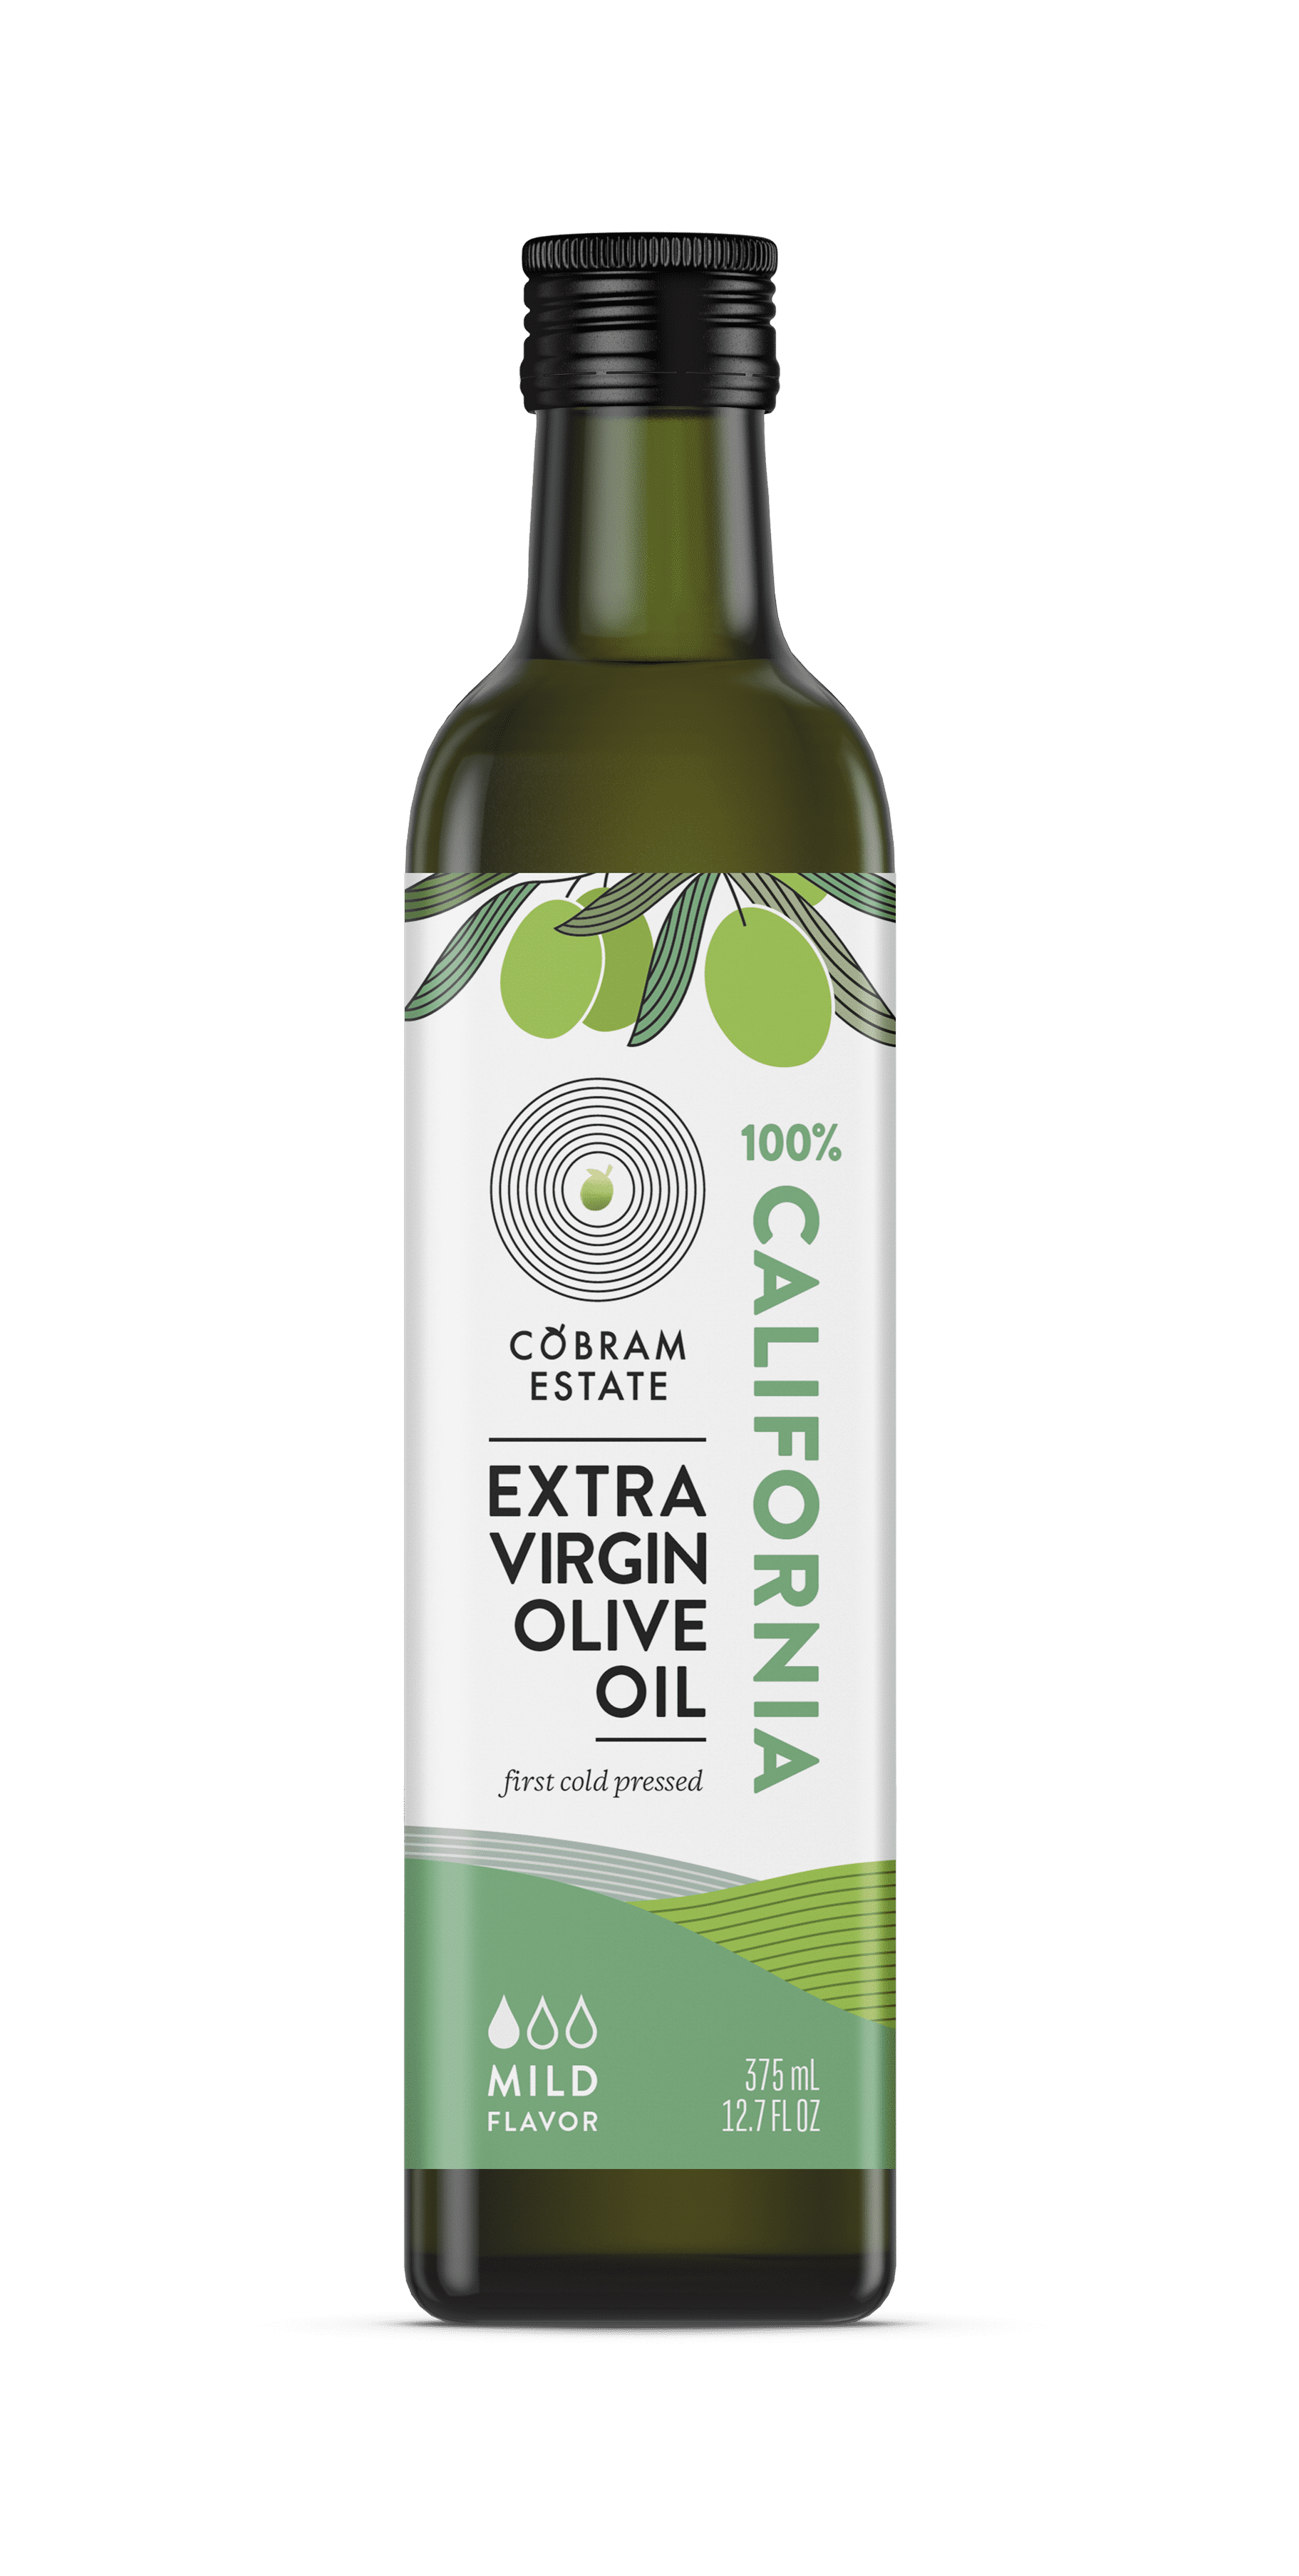 Cobram Estate California Mild Extra Virgin Olive Oil, 375ml